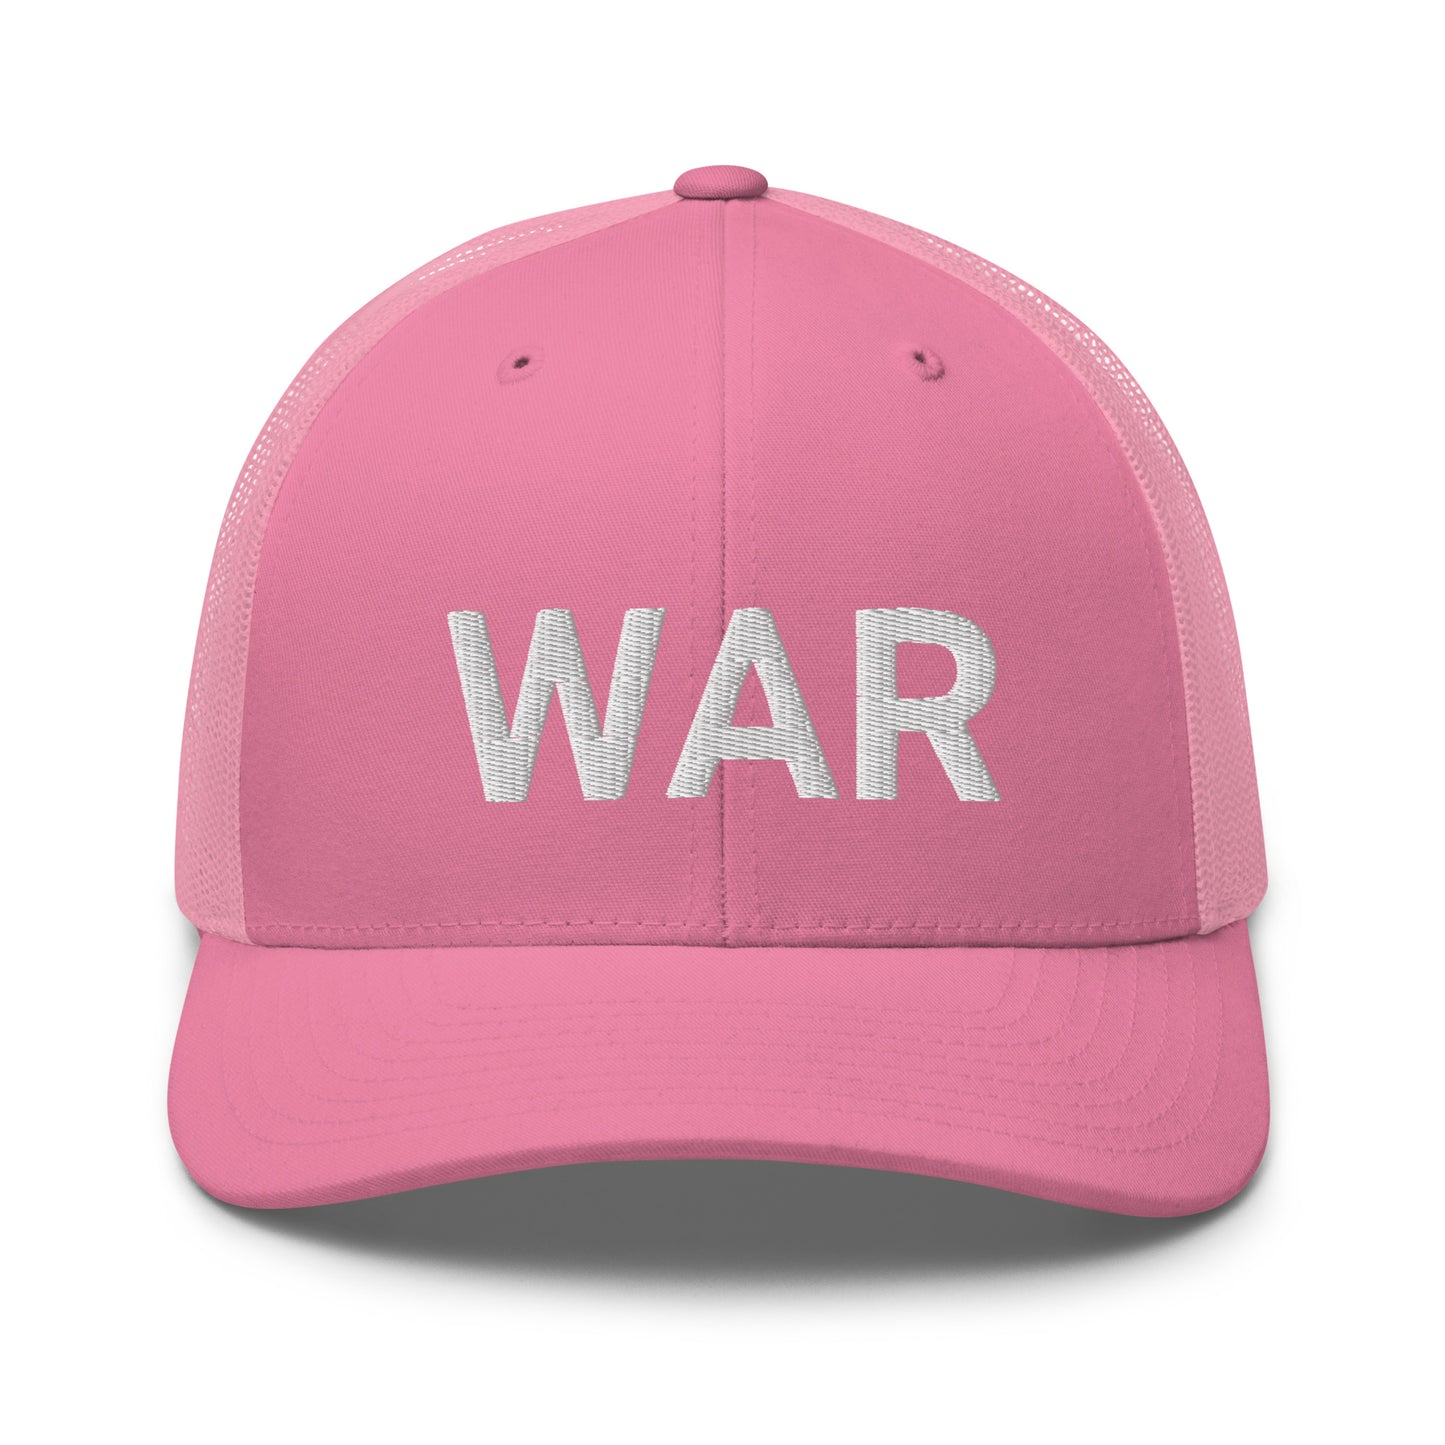 Marvin Hagler War hat / Dustin Poirier War Hat / War Trucker Cap